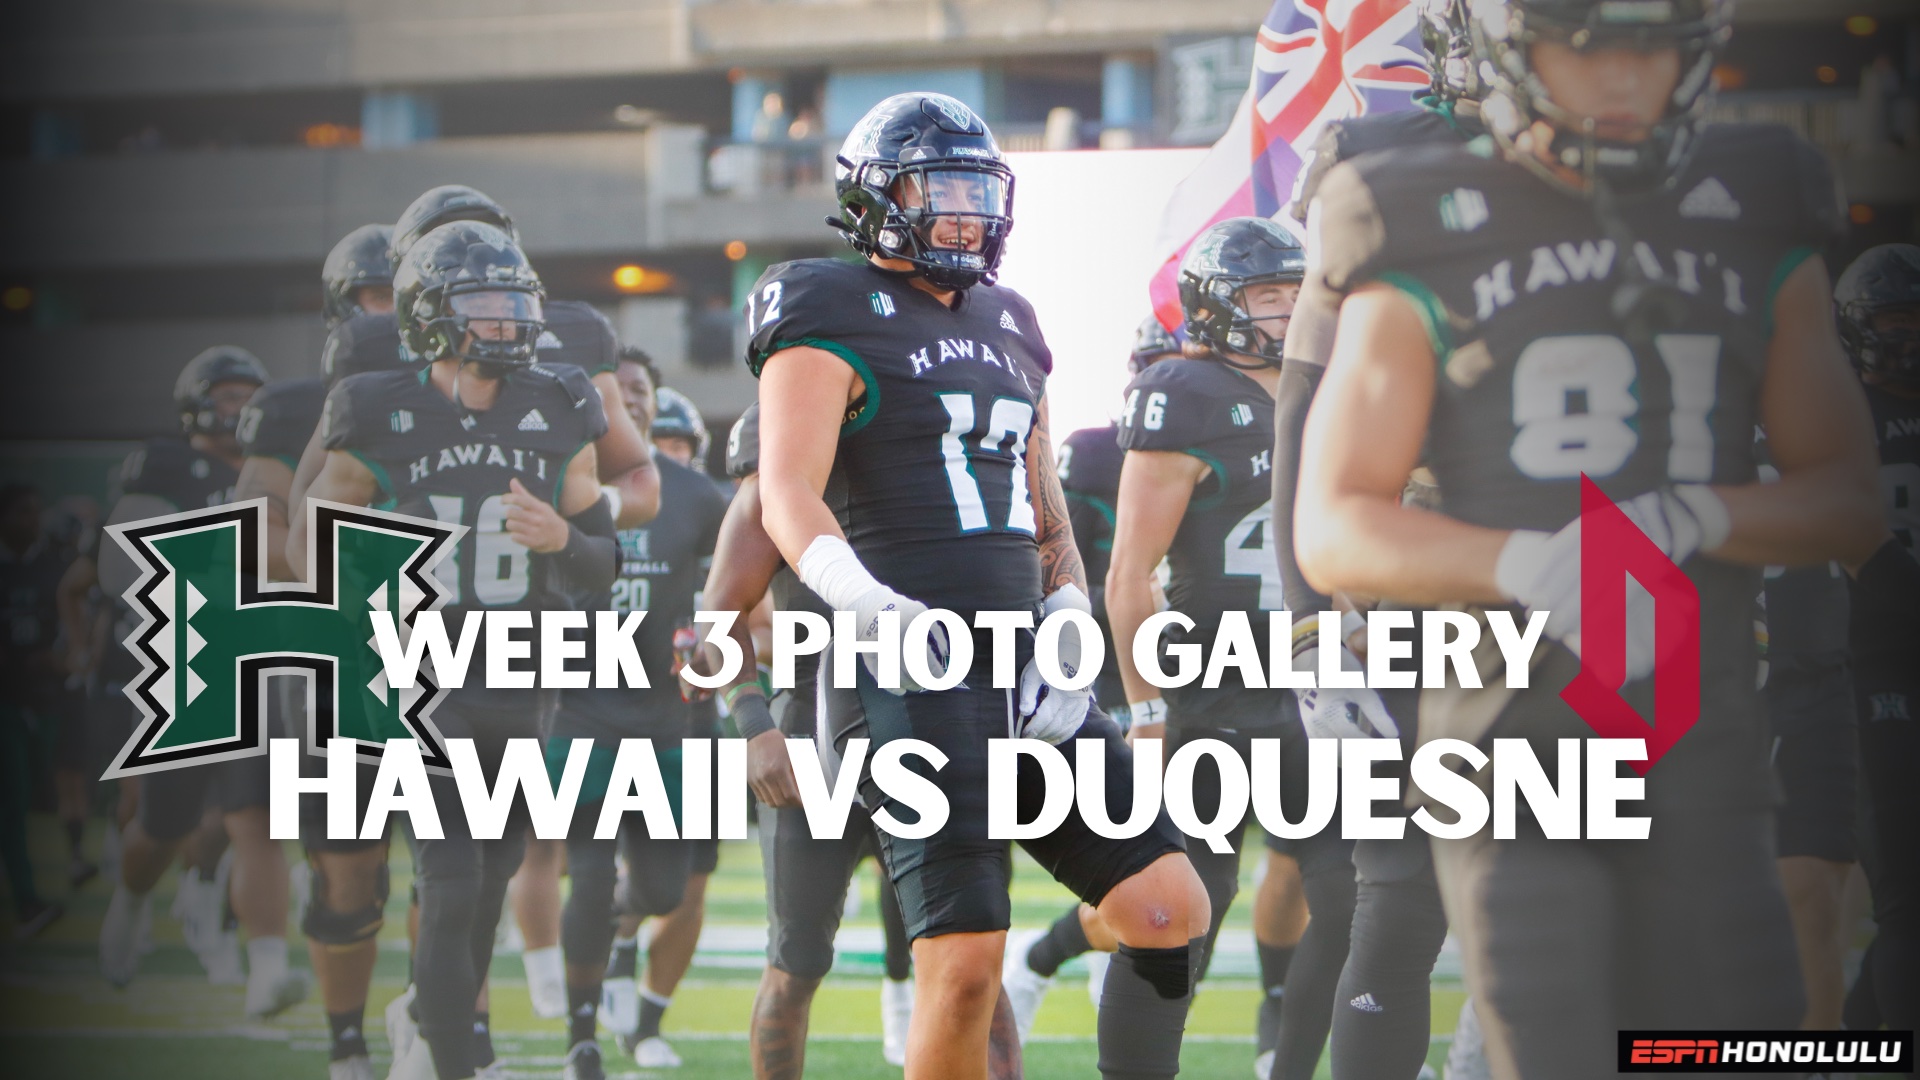 Hawaii vs. Duquesne Photo Gallery